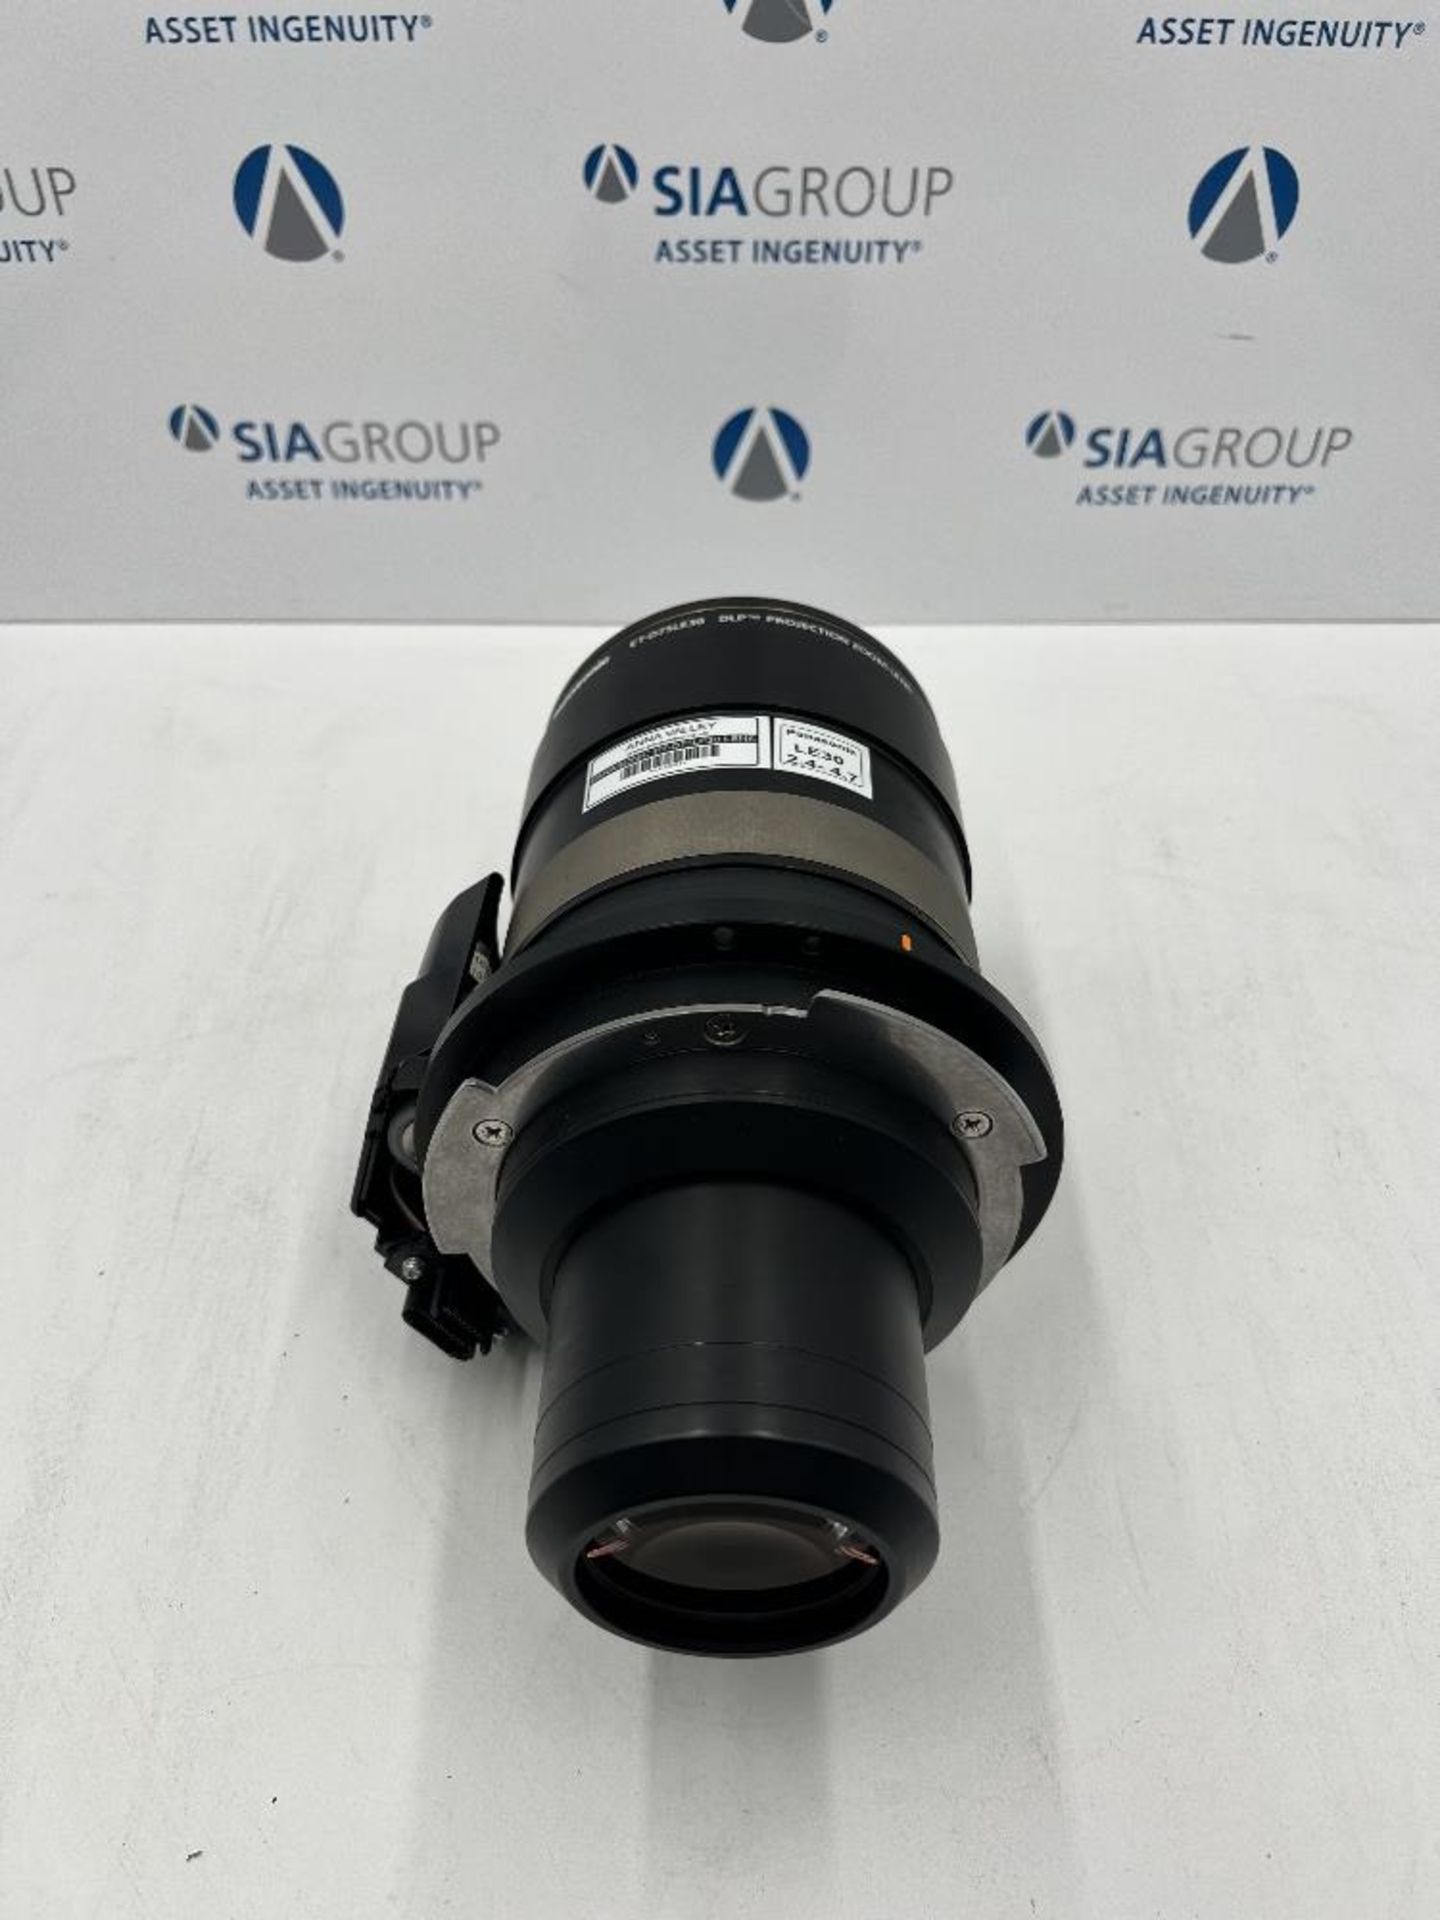 Panasonic ET-D75LE30 2.4-4.7 Projection Zoom Lens With Carrier Case - Image 4 of 7